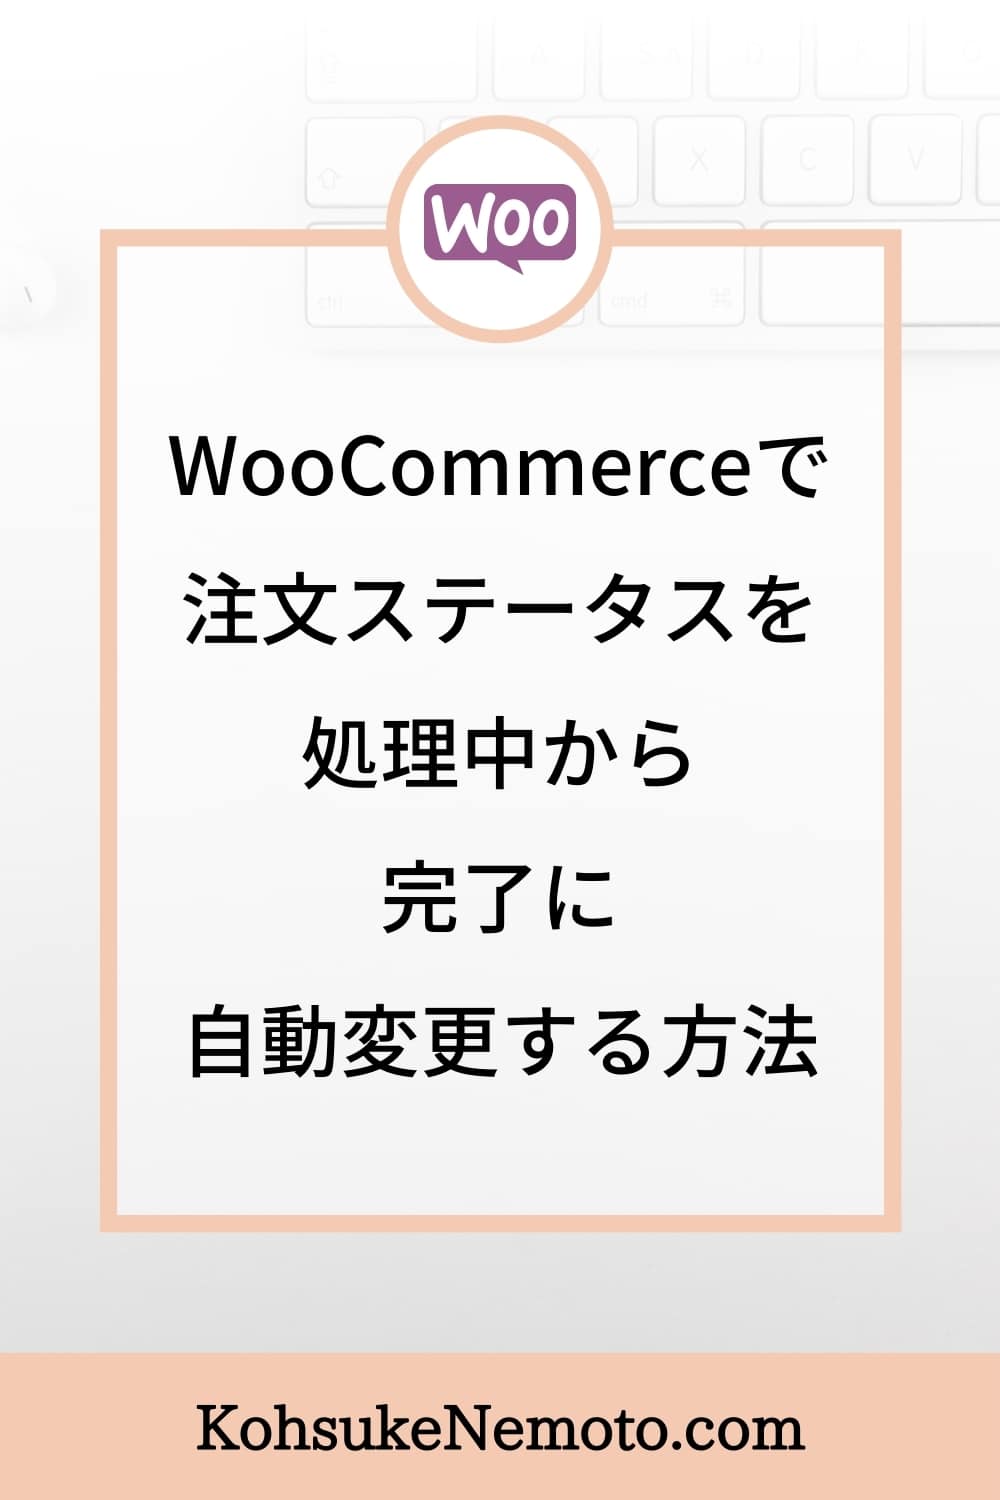 WooCommerceで注文ステータスを処理中から完了に自動変更する方法